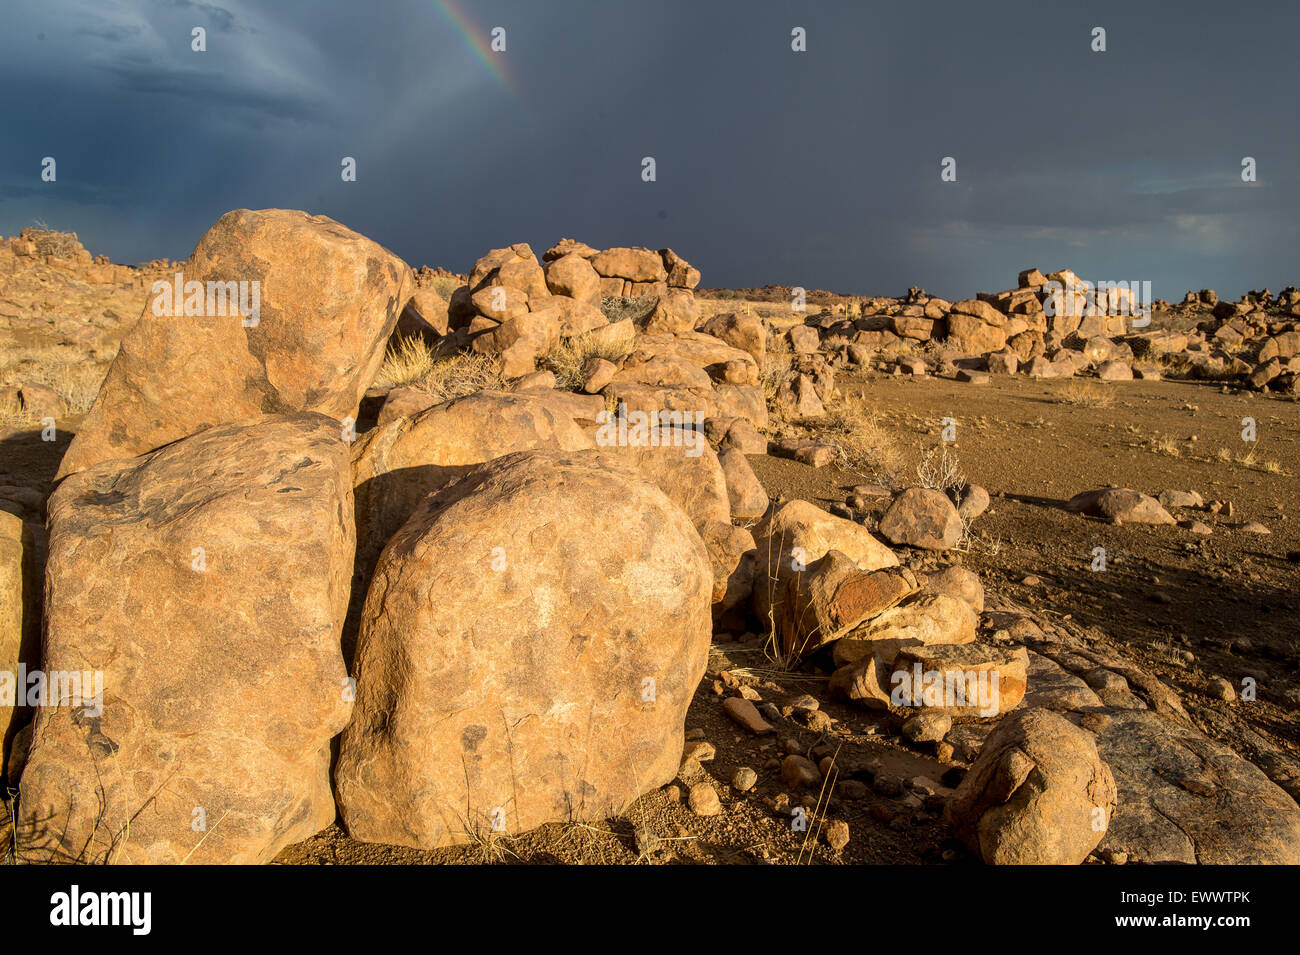 Keetmanshoop, Namibia, Afrika - Riesen Spielplatz, haufenweise große auswarfen Felsen. Stockfoto